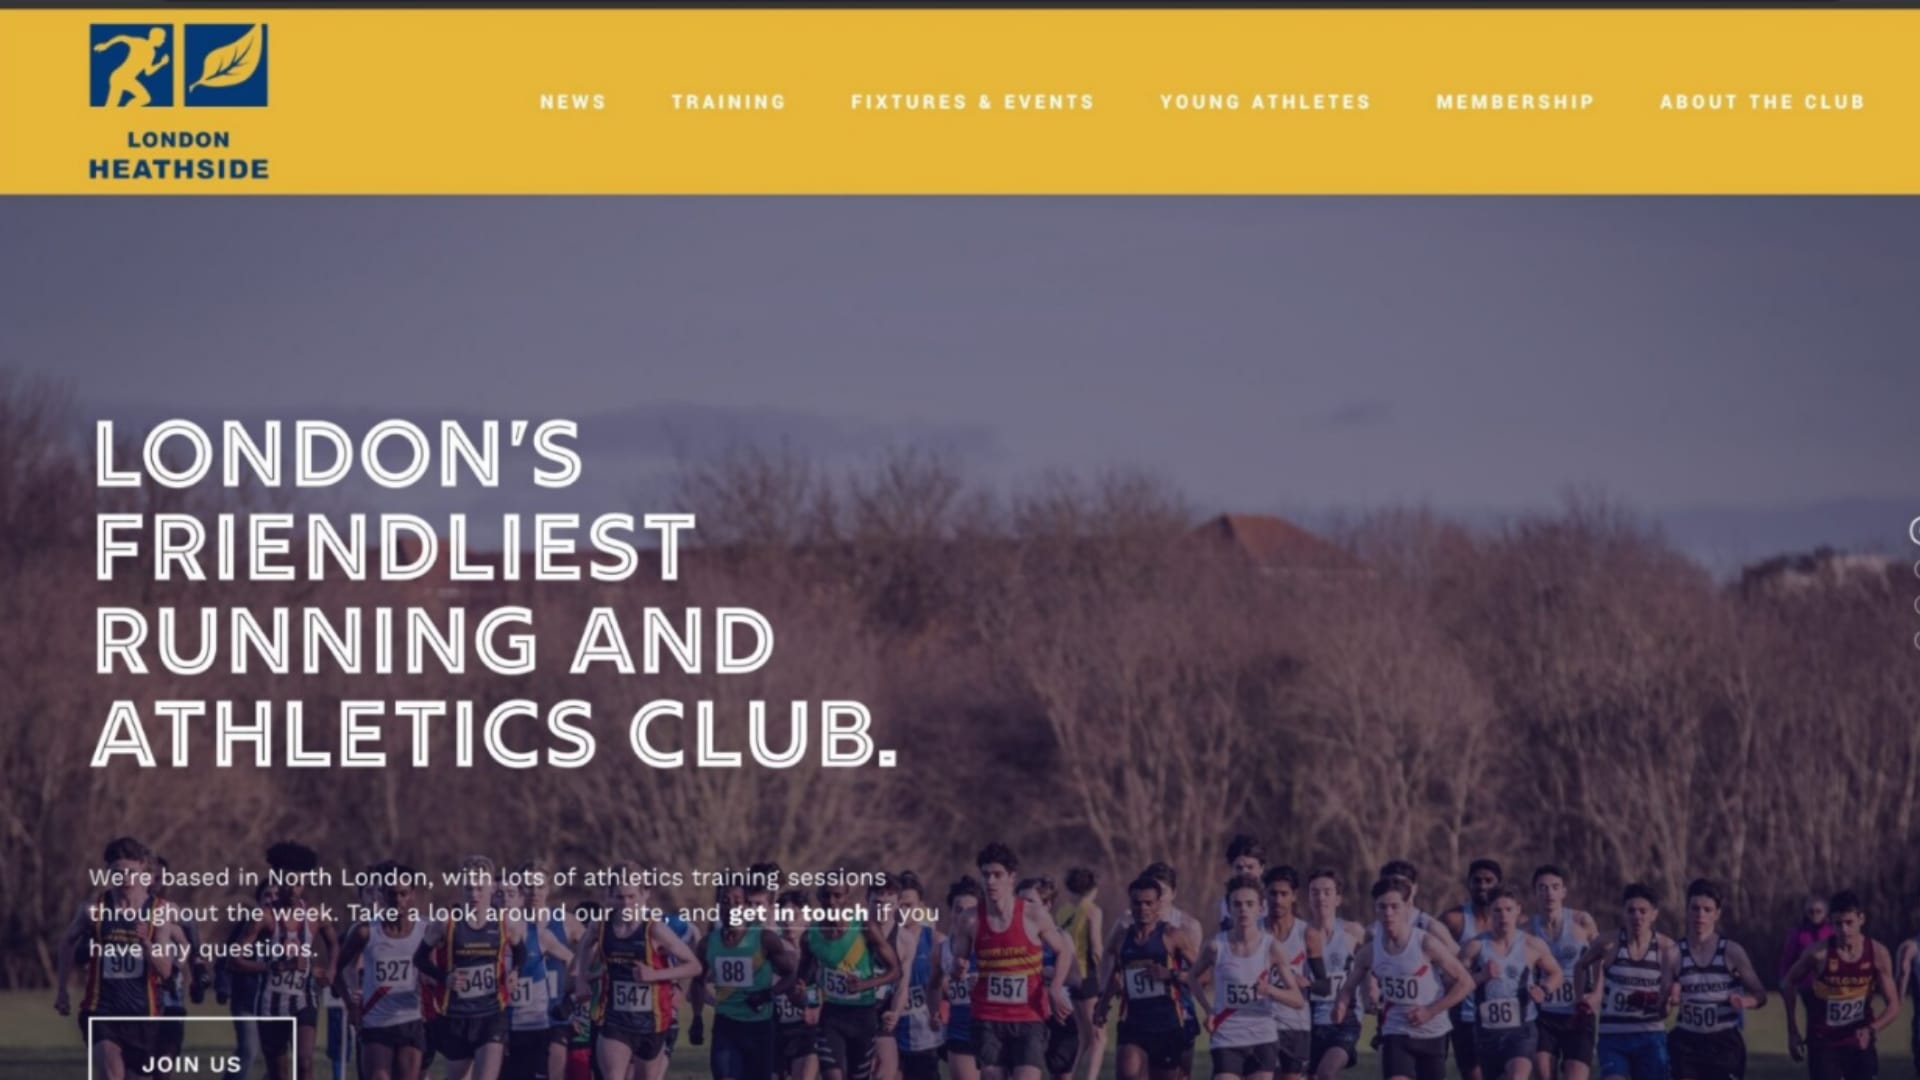 The club's homepage